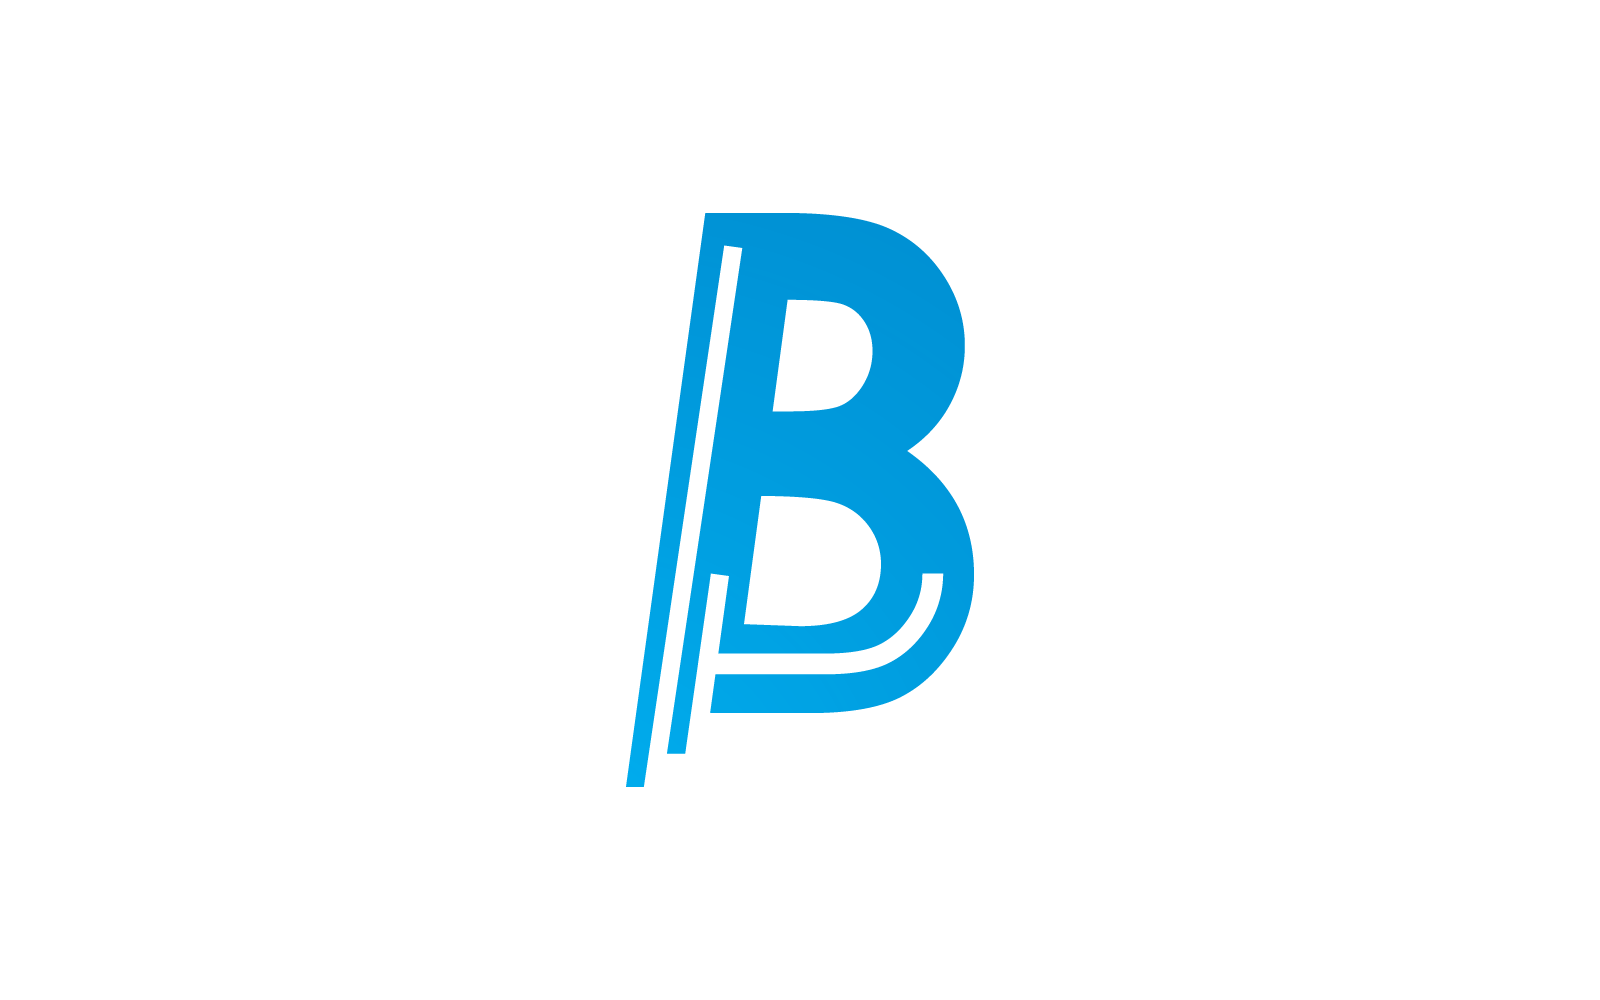 B Initial letter alphabet font logo vector design